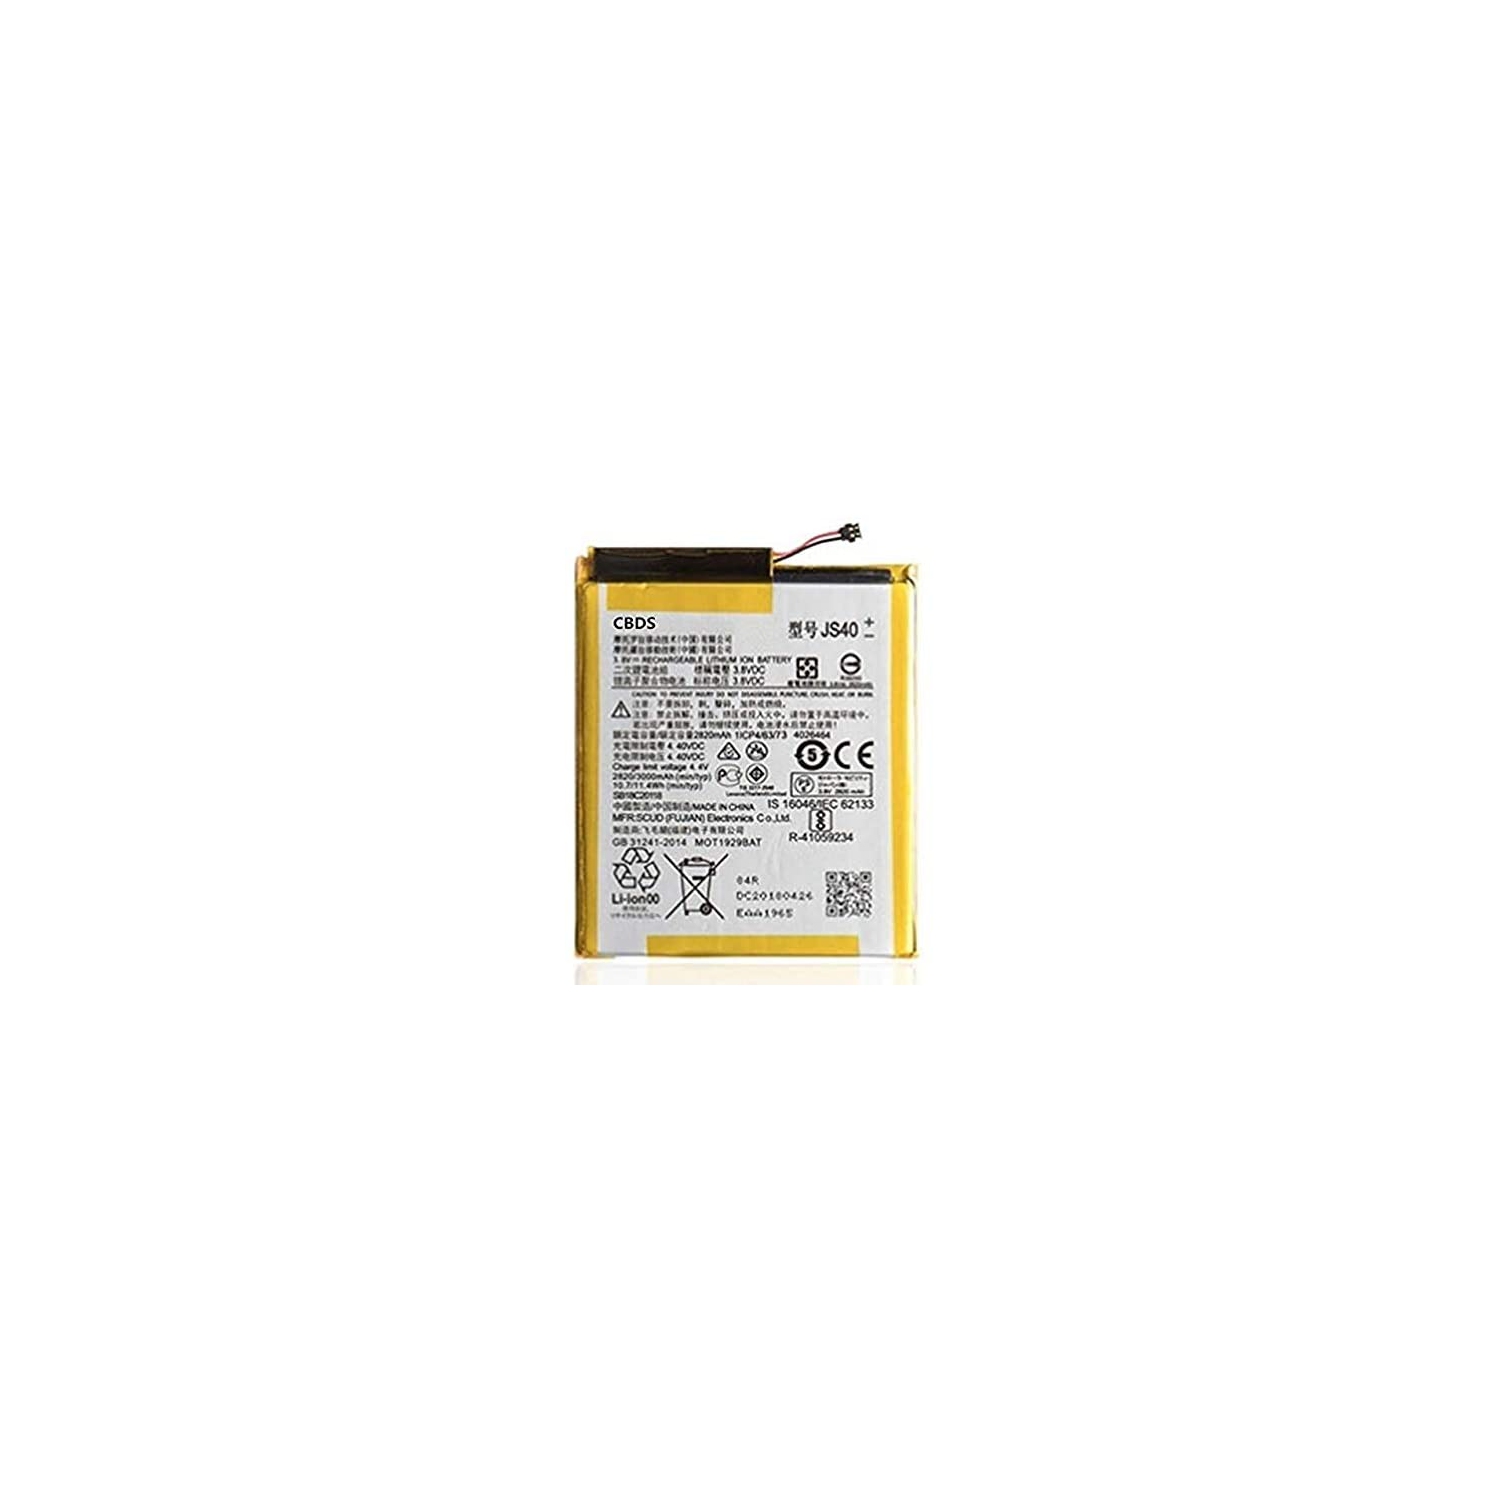 (CBDS) 2820mAh, 10.7 Wh Replacement Battery - Compatible with Motorola Moto Z3 Z3 Play XT1929 XT1929-1 XT1929-4